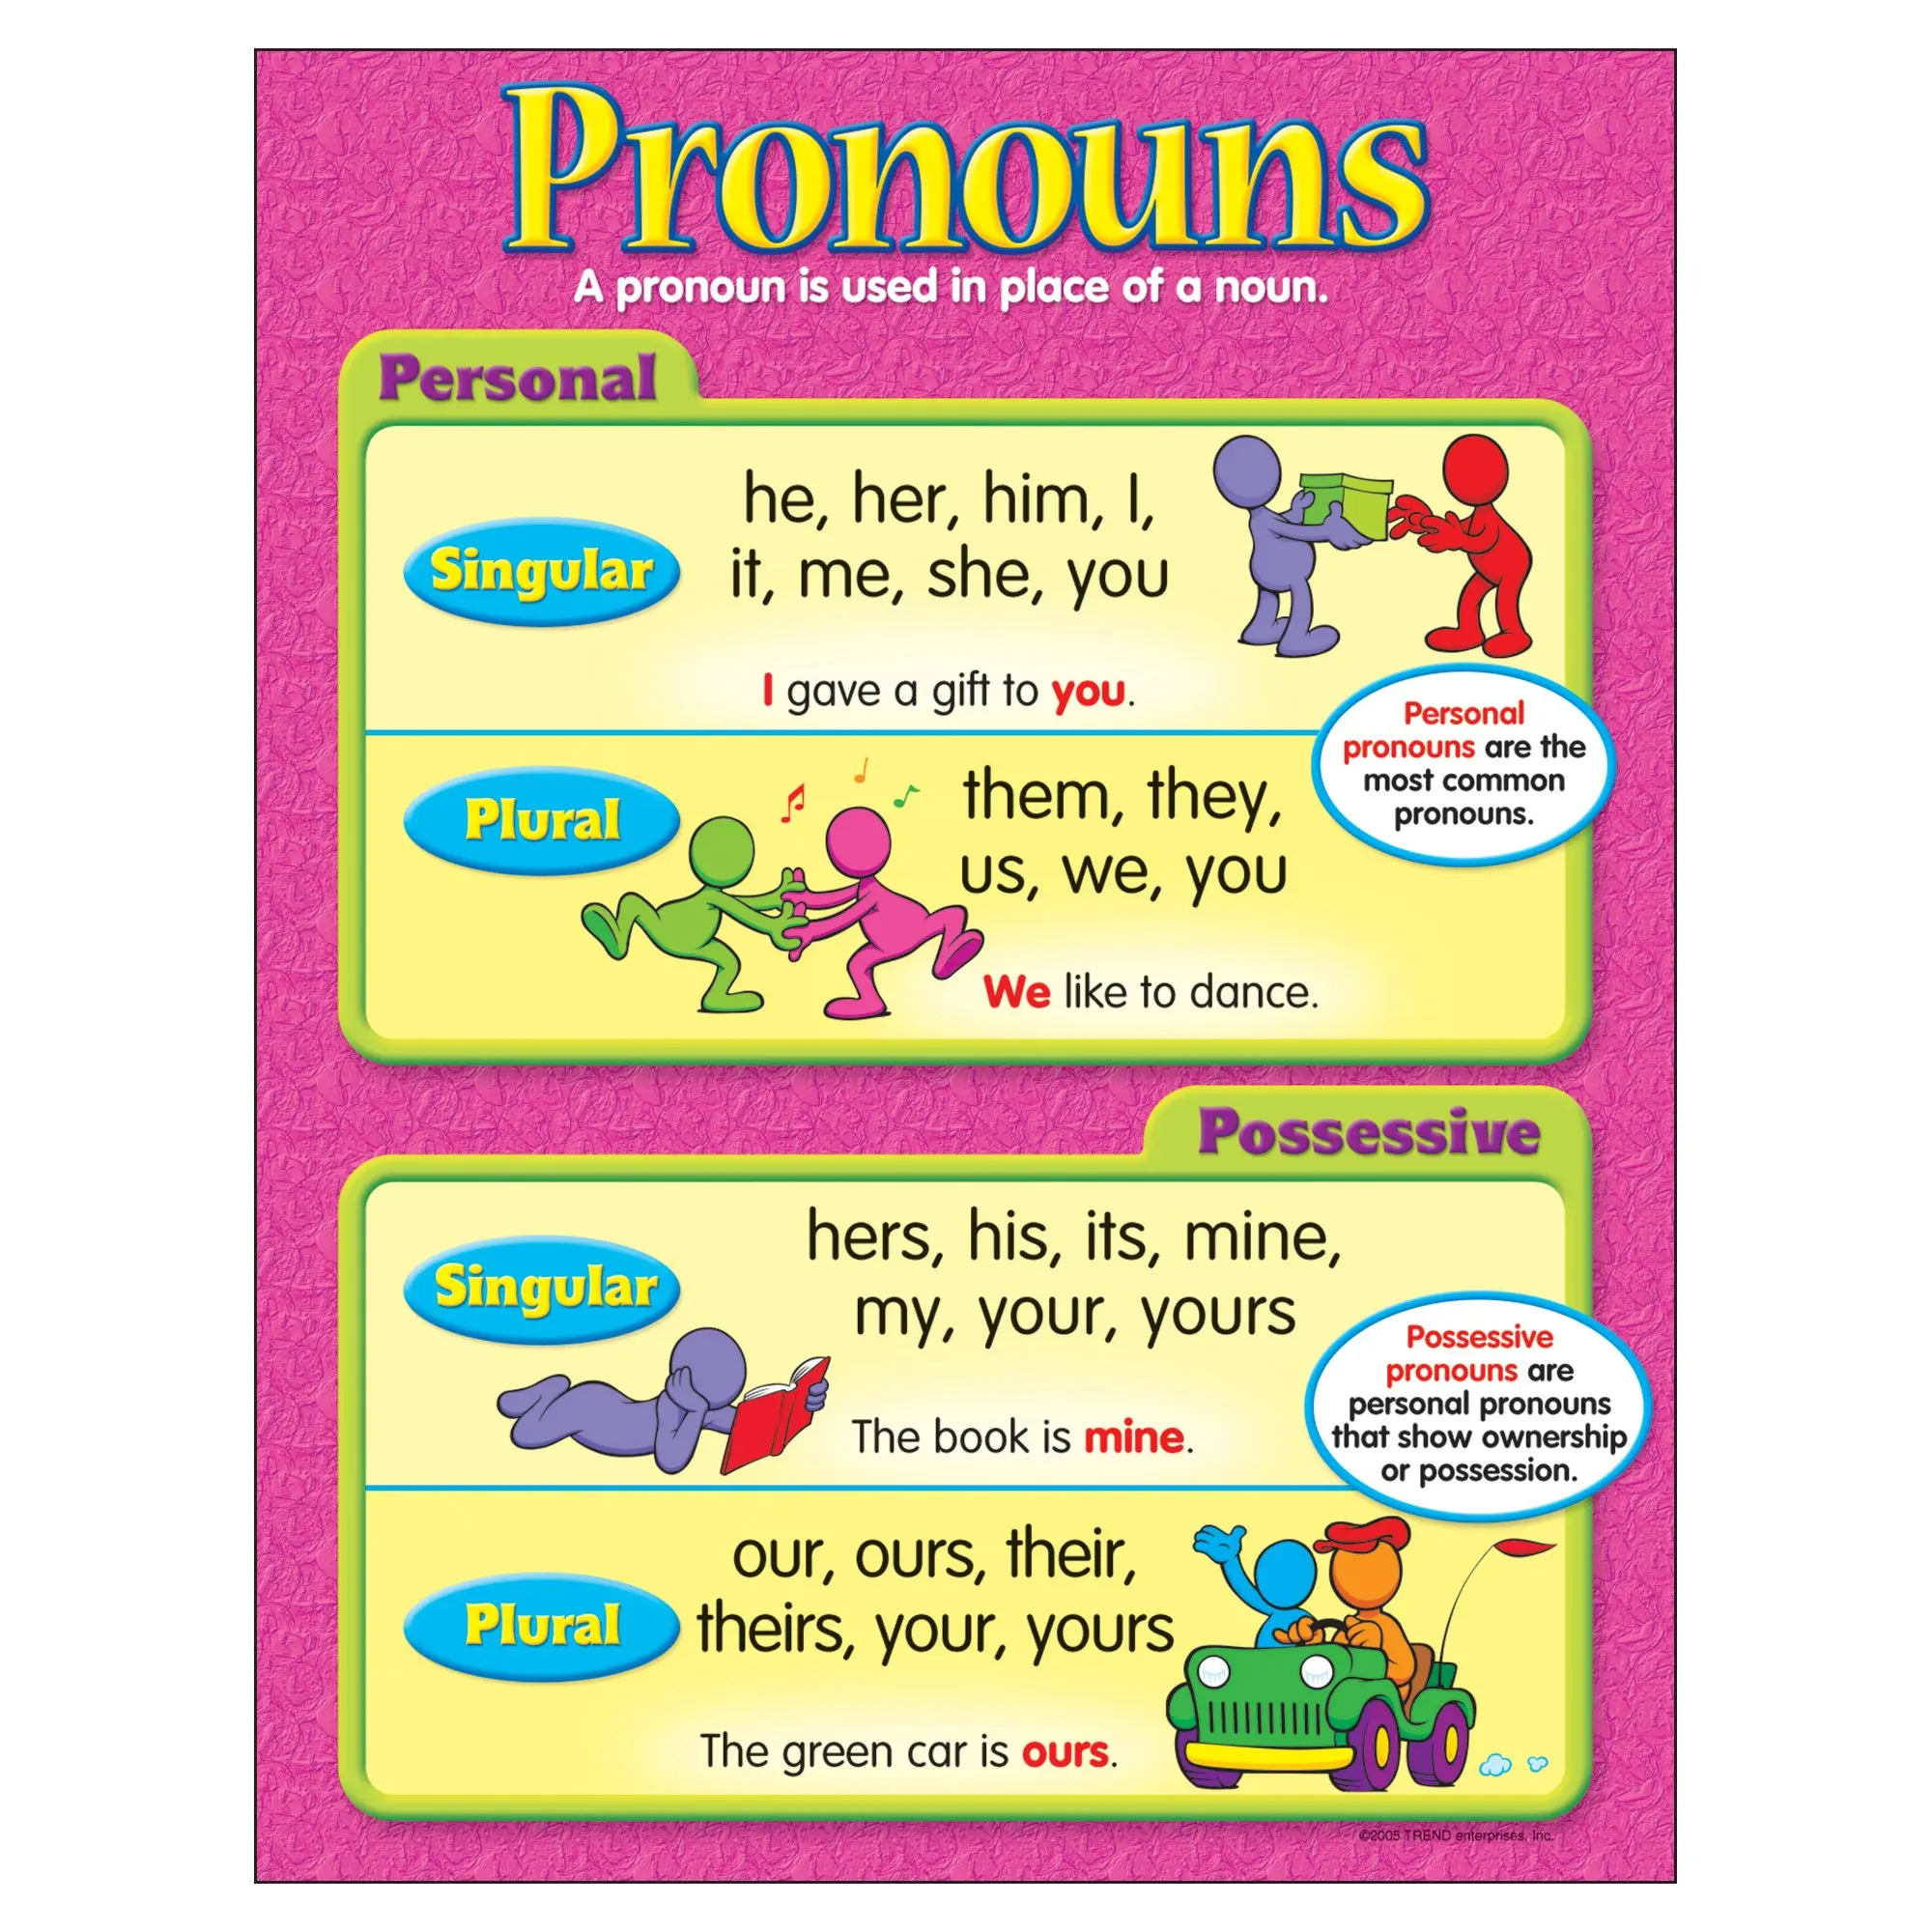 personal-pronouns-esl-worksheet-by-ruda9110